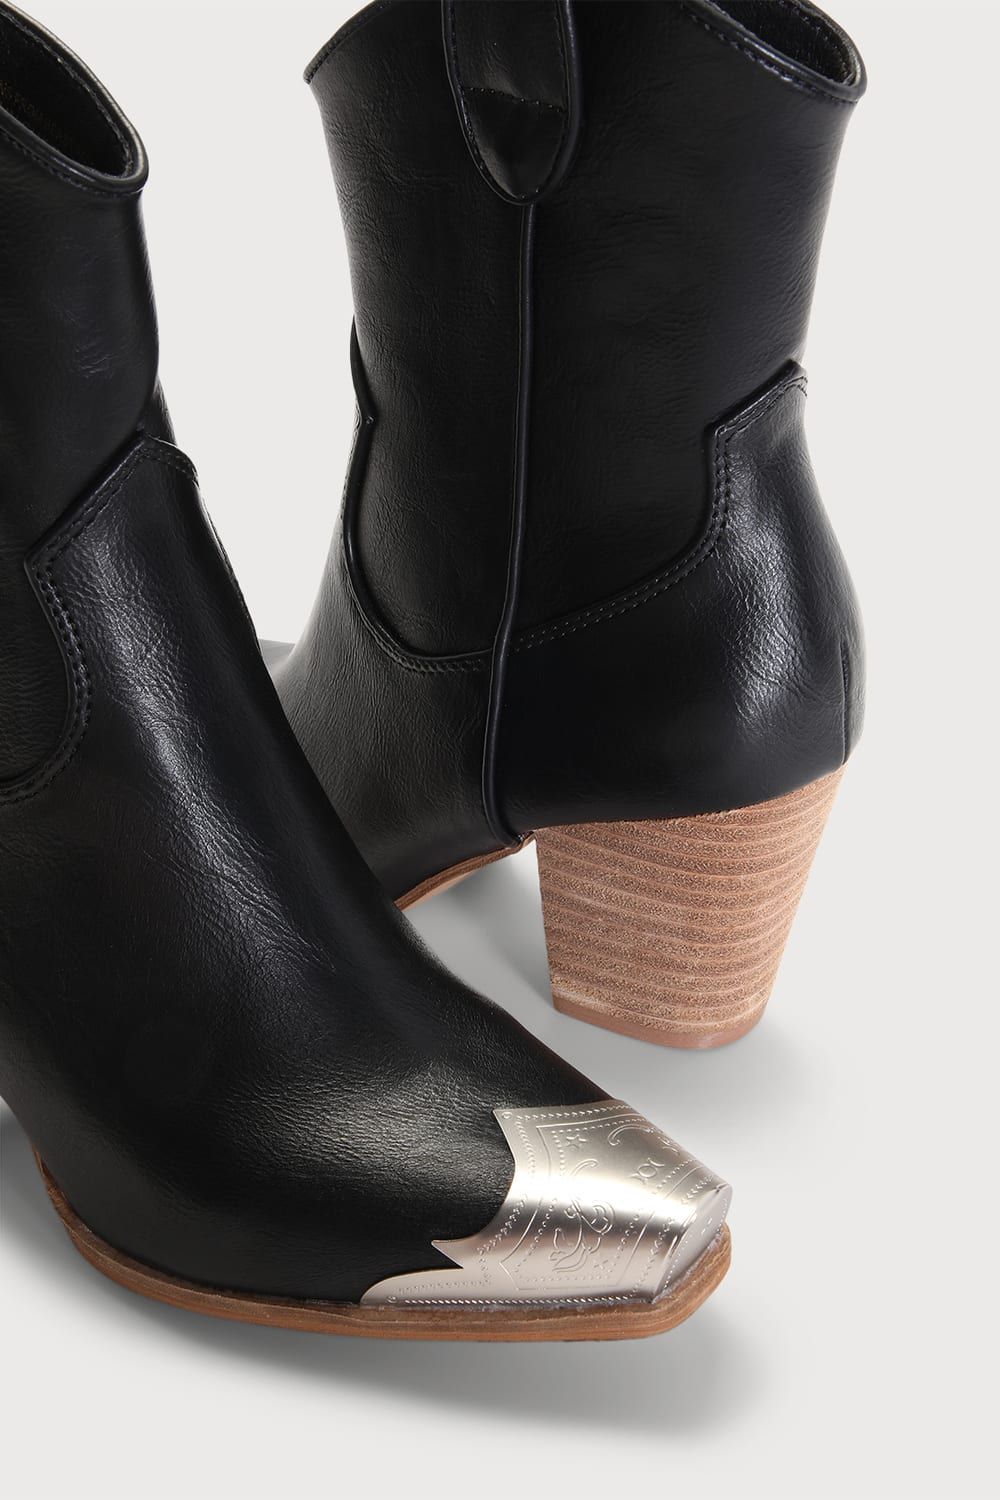 Naiya Black Western Ankle Boots | Lulus